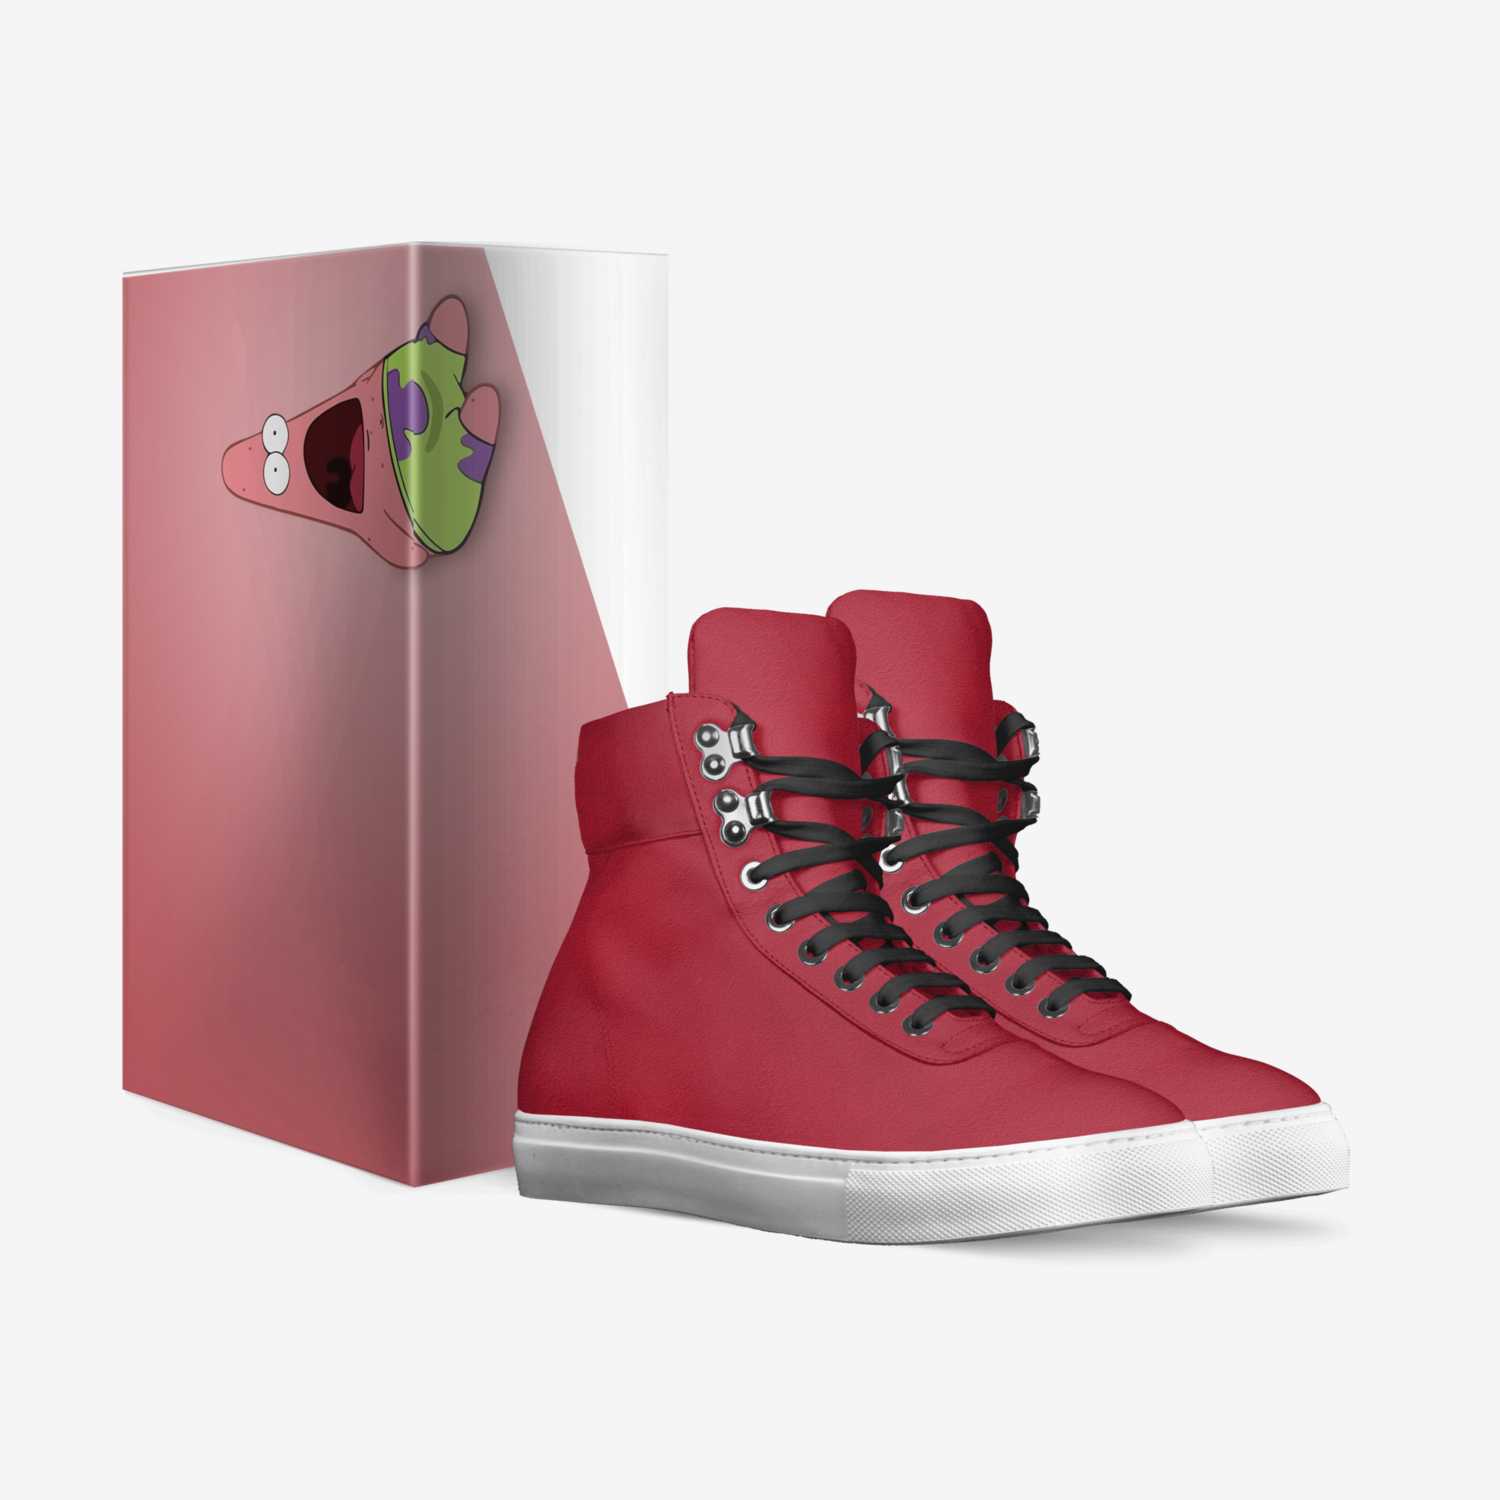 Deku custom made in Italy shoes by Matthias Hammond | Box view